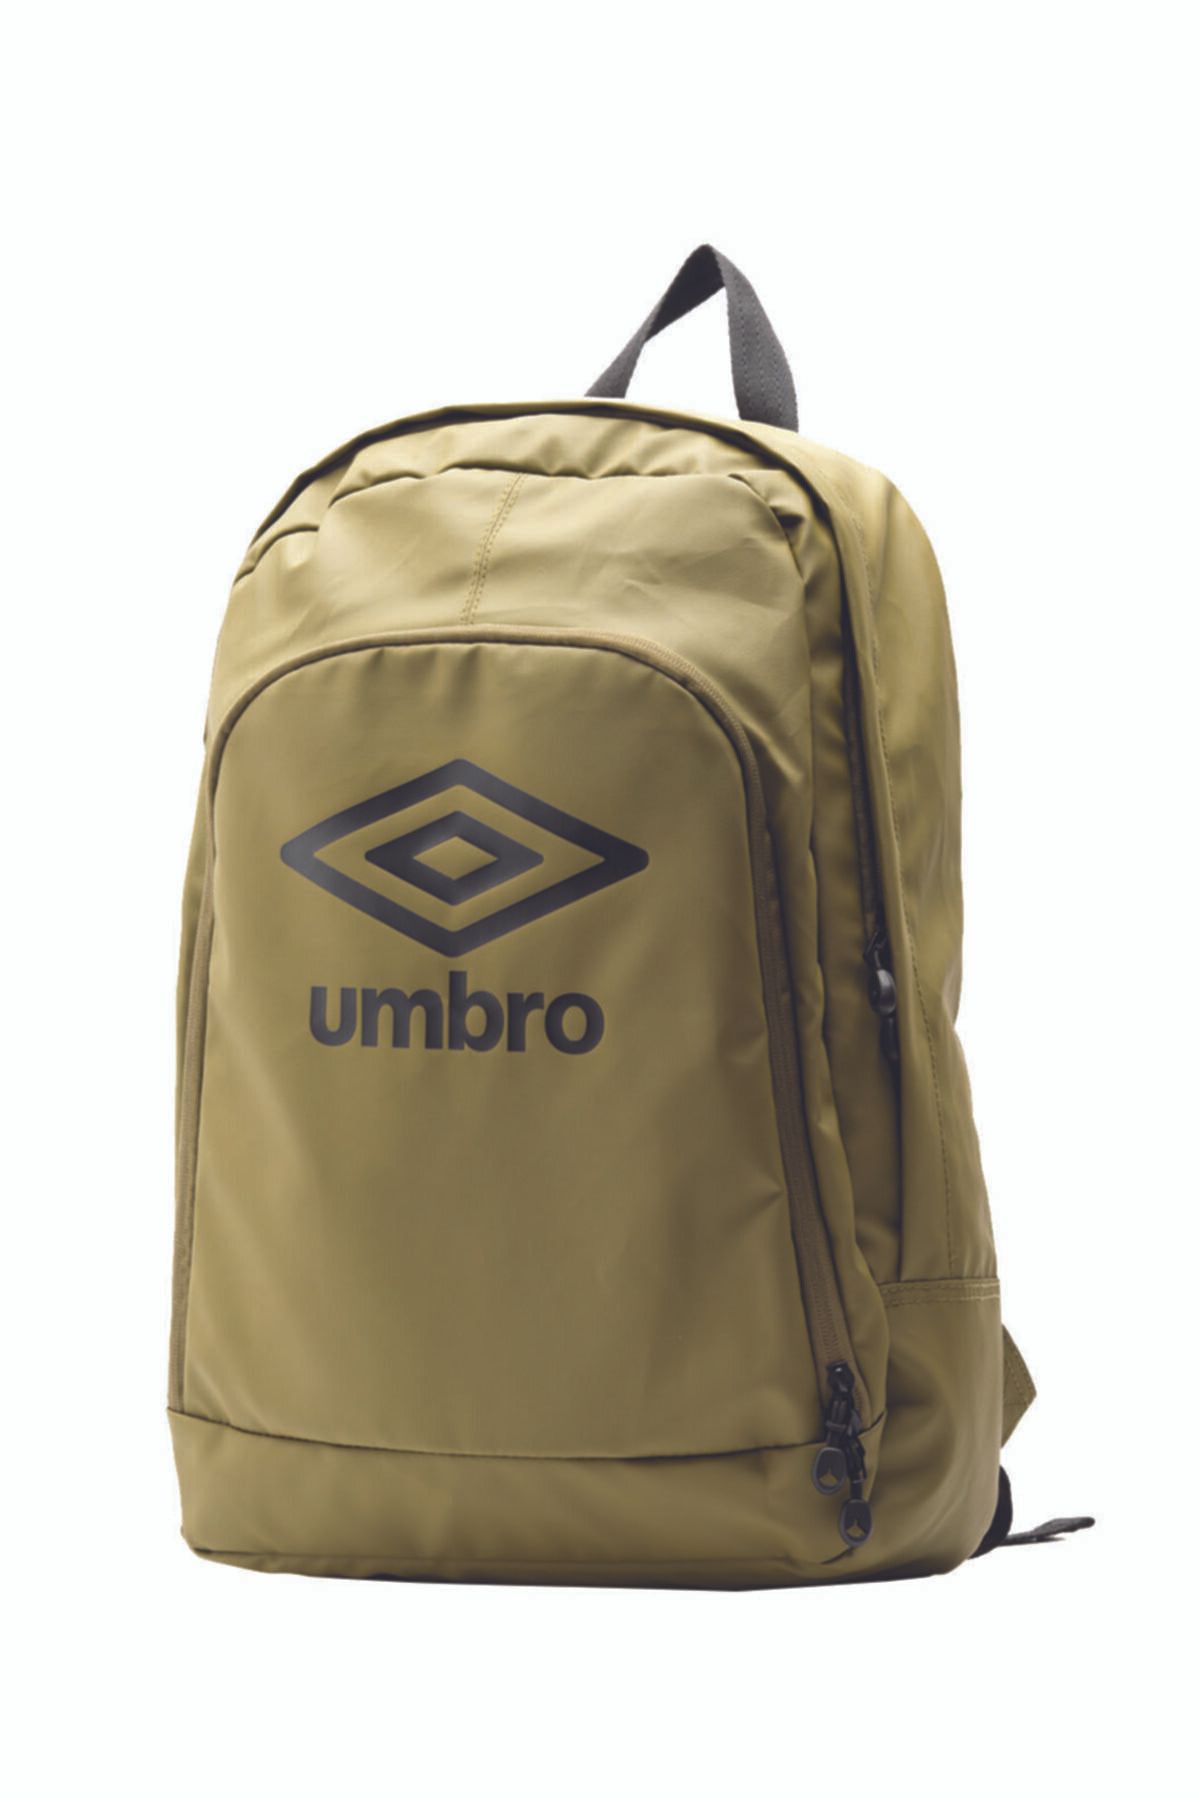 Umbro Unisex Haki Umb Tech Training Backpack Sırt Çantası Tt-0046